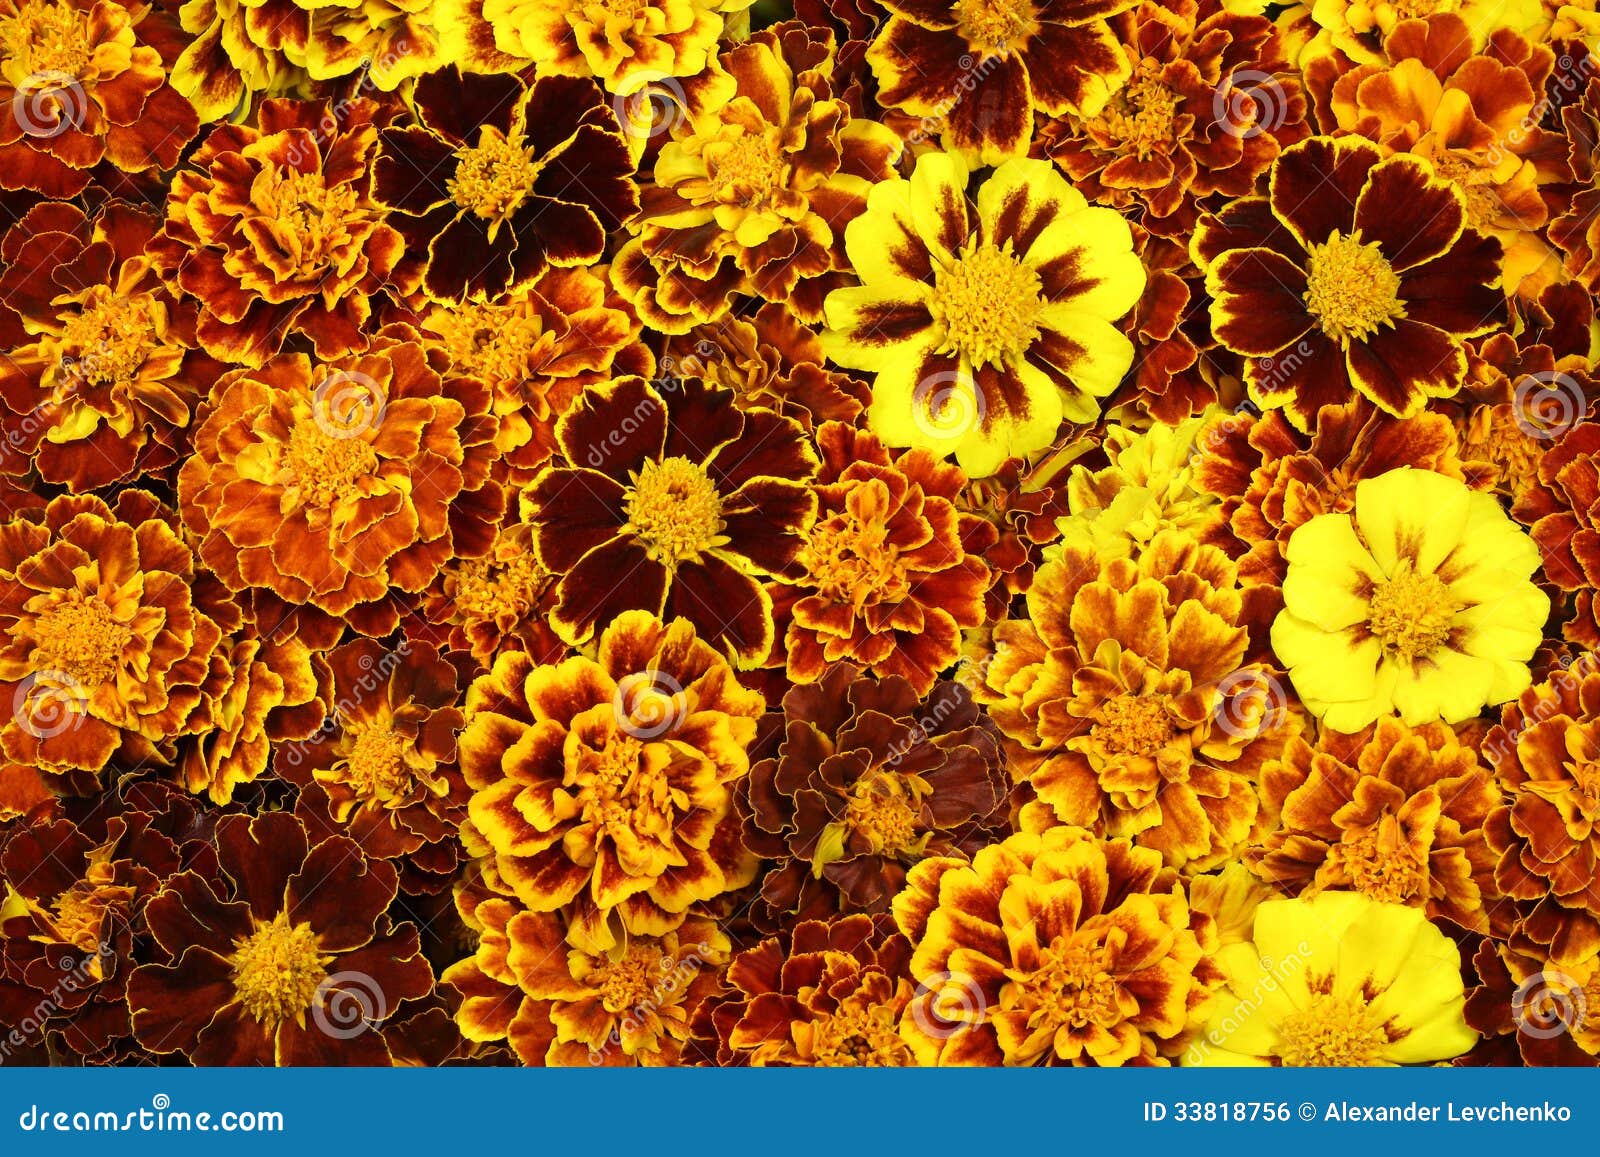 Autumn Flowers Royalty Free Stock Image  Image: 33818756